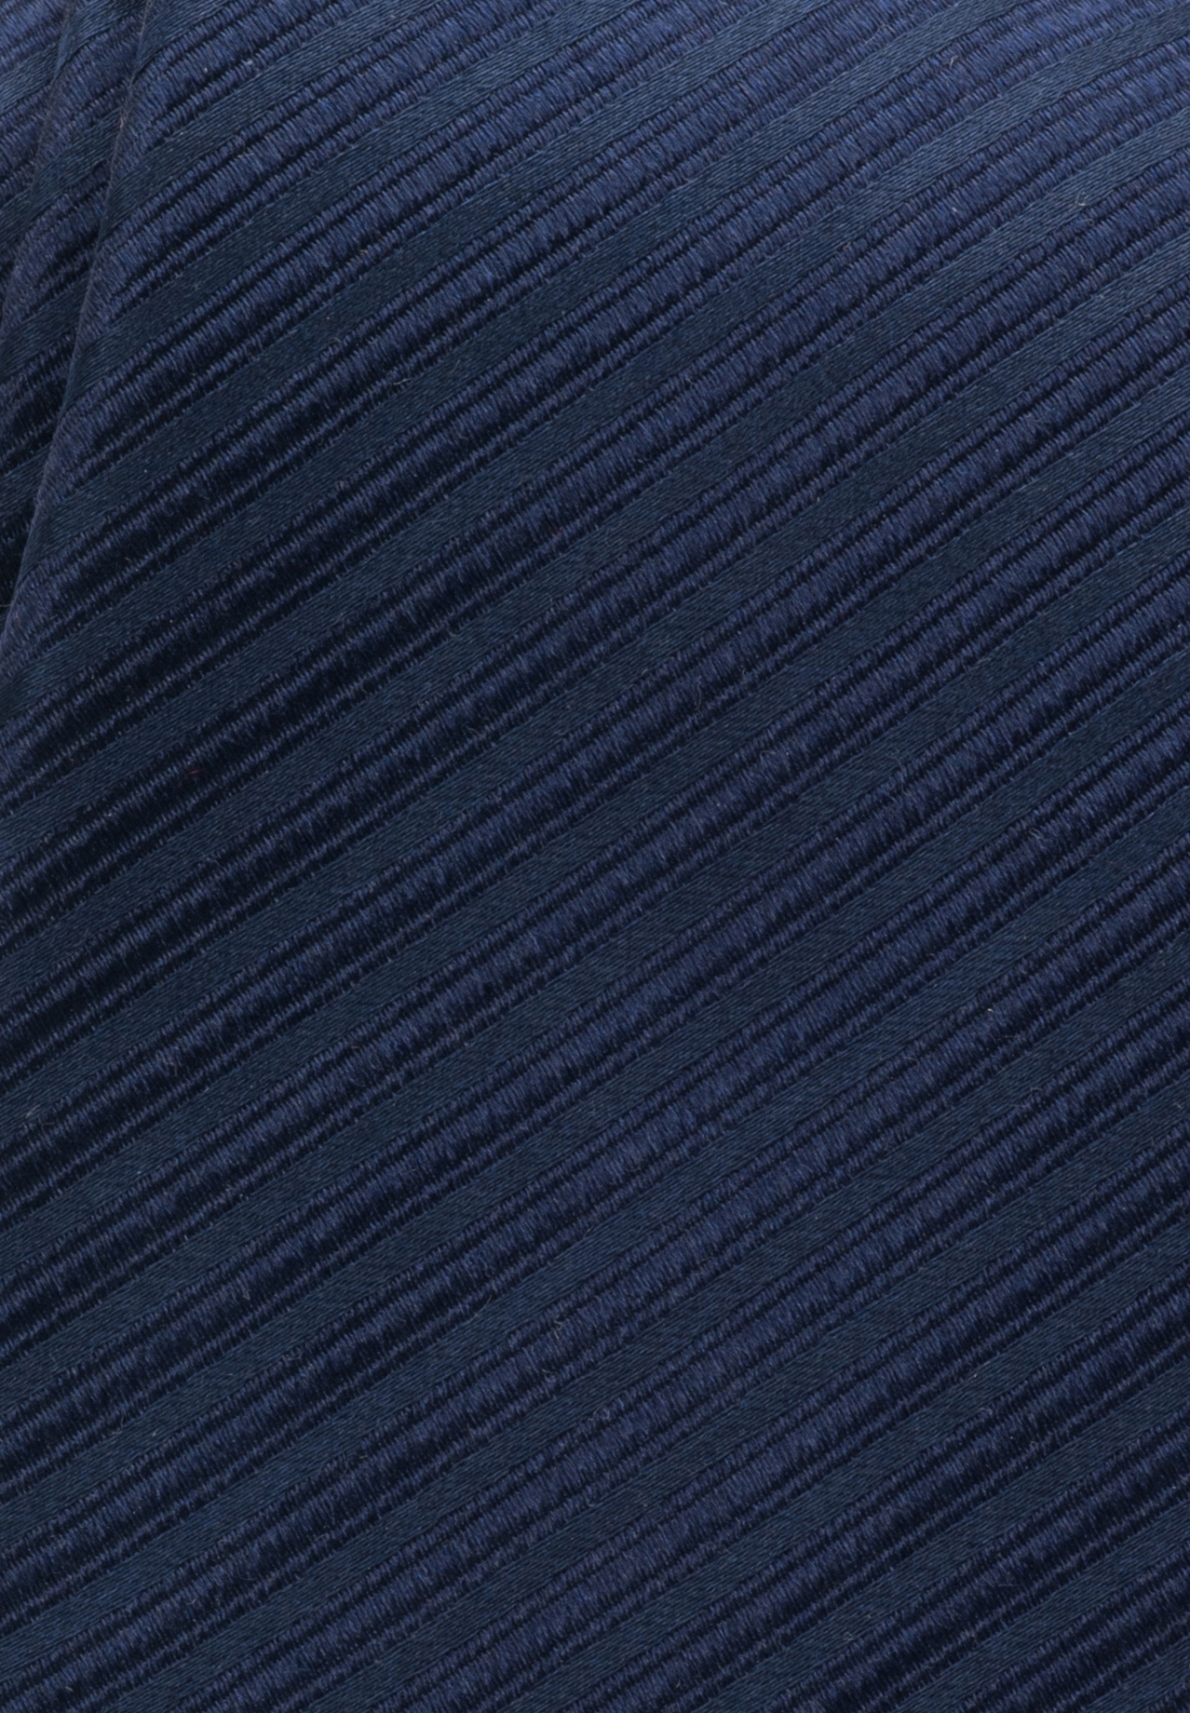 Eterna Krawatte dunkelblau gestreift 9716-19 | MODE SPEZIALIST